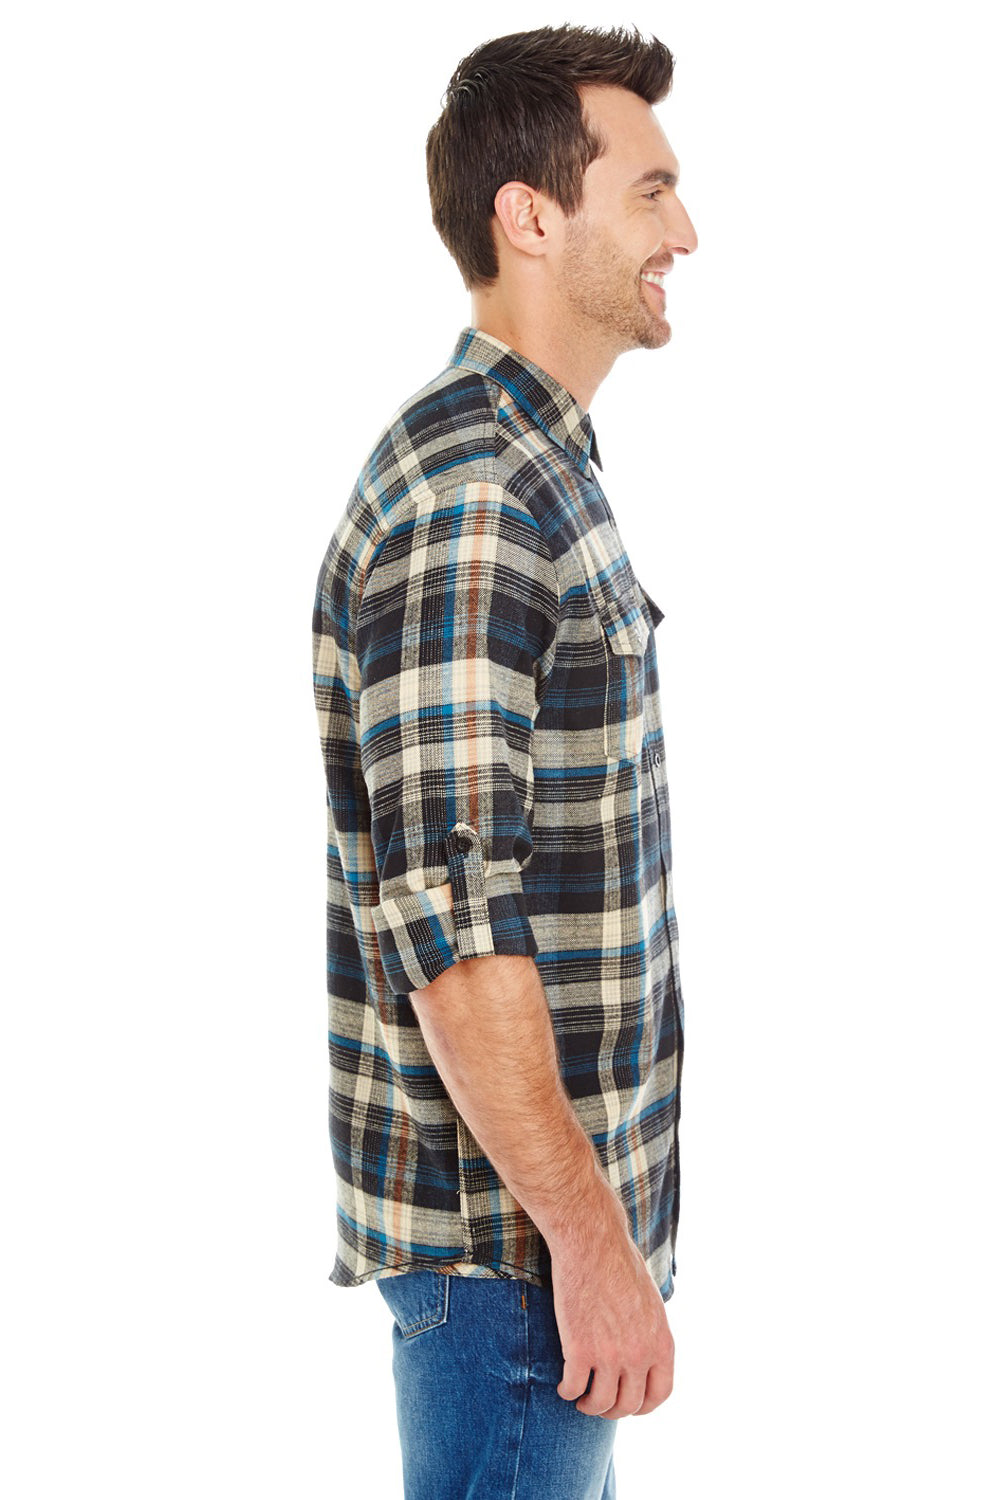 Burnside B8210/8210 Mens Flannel Long Sleeve Button Down Shirt w/ Double Pockets Dark Khaki Model Side